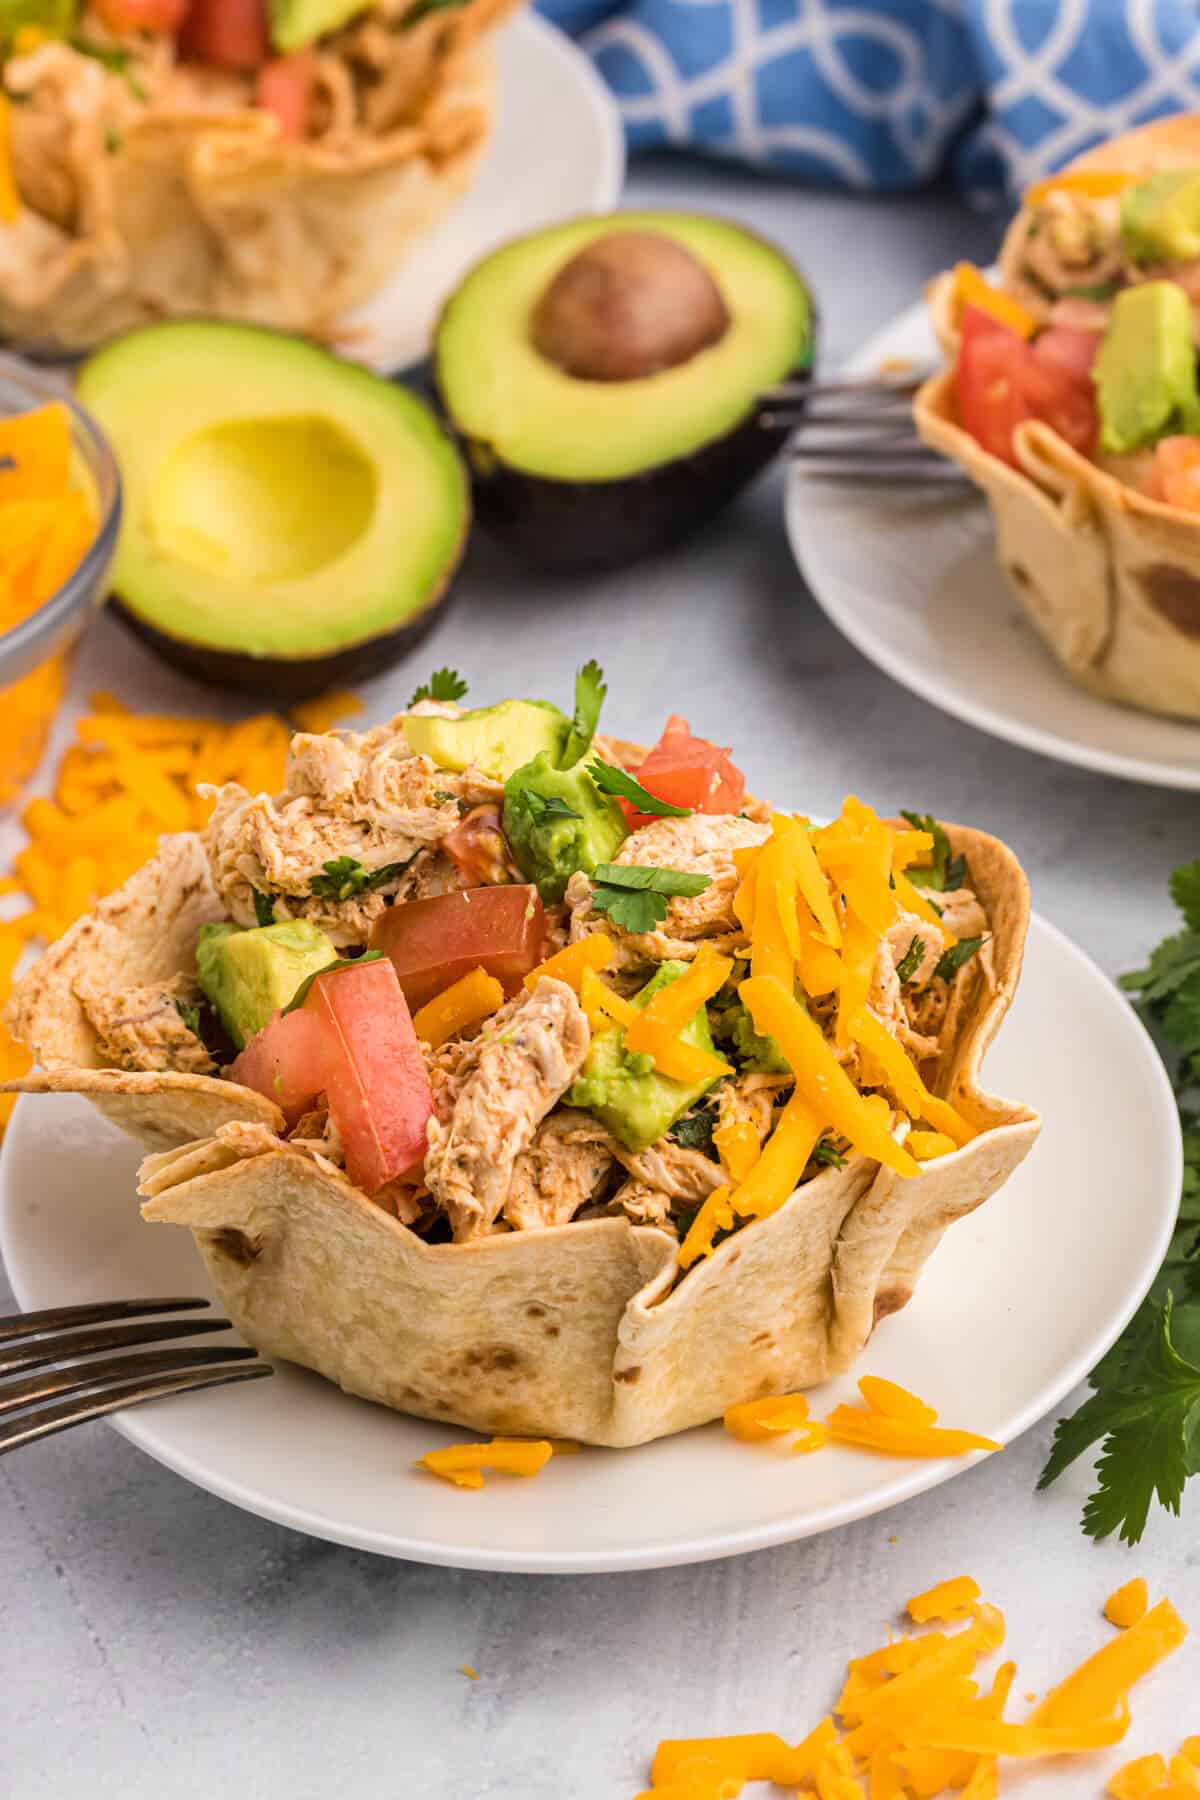 Taco Chicken salad in a tortilla bowl.